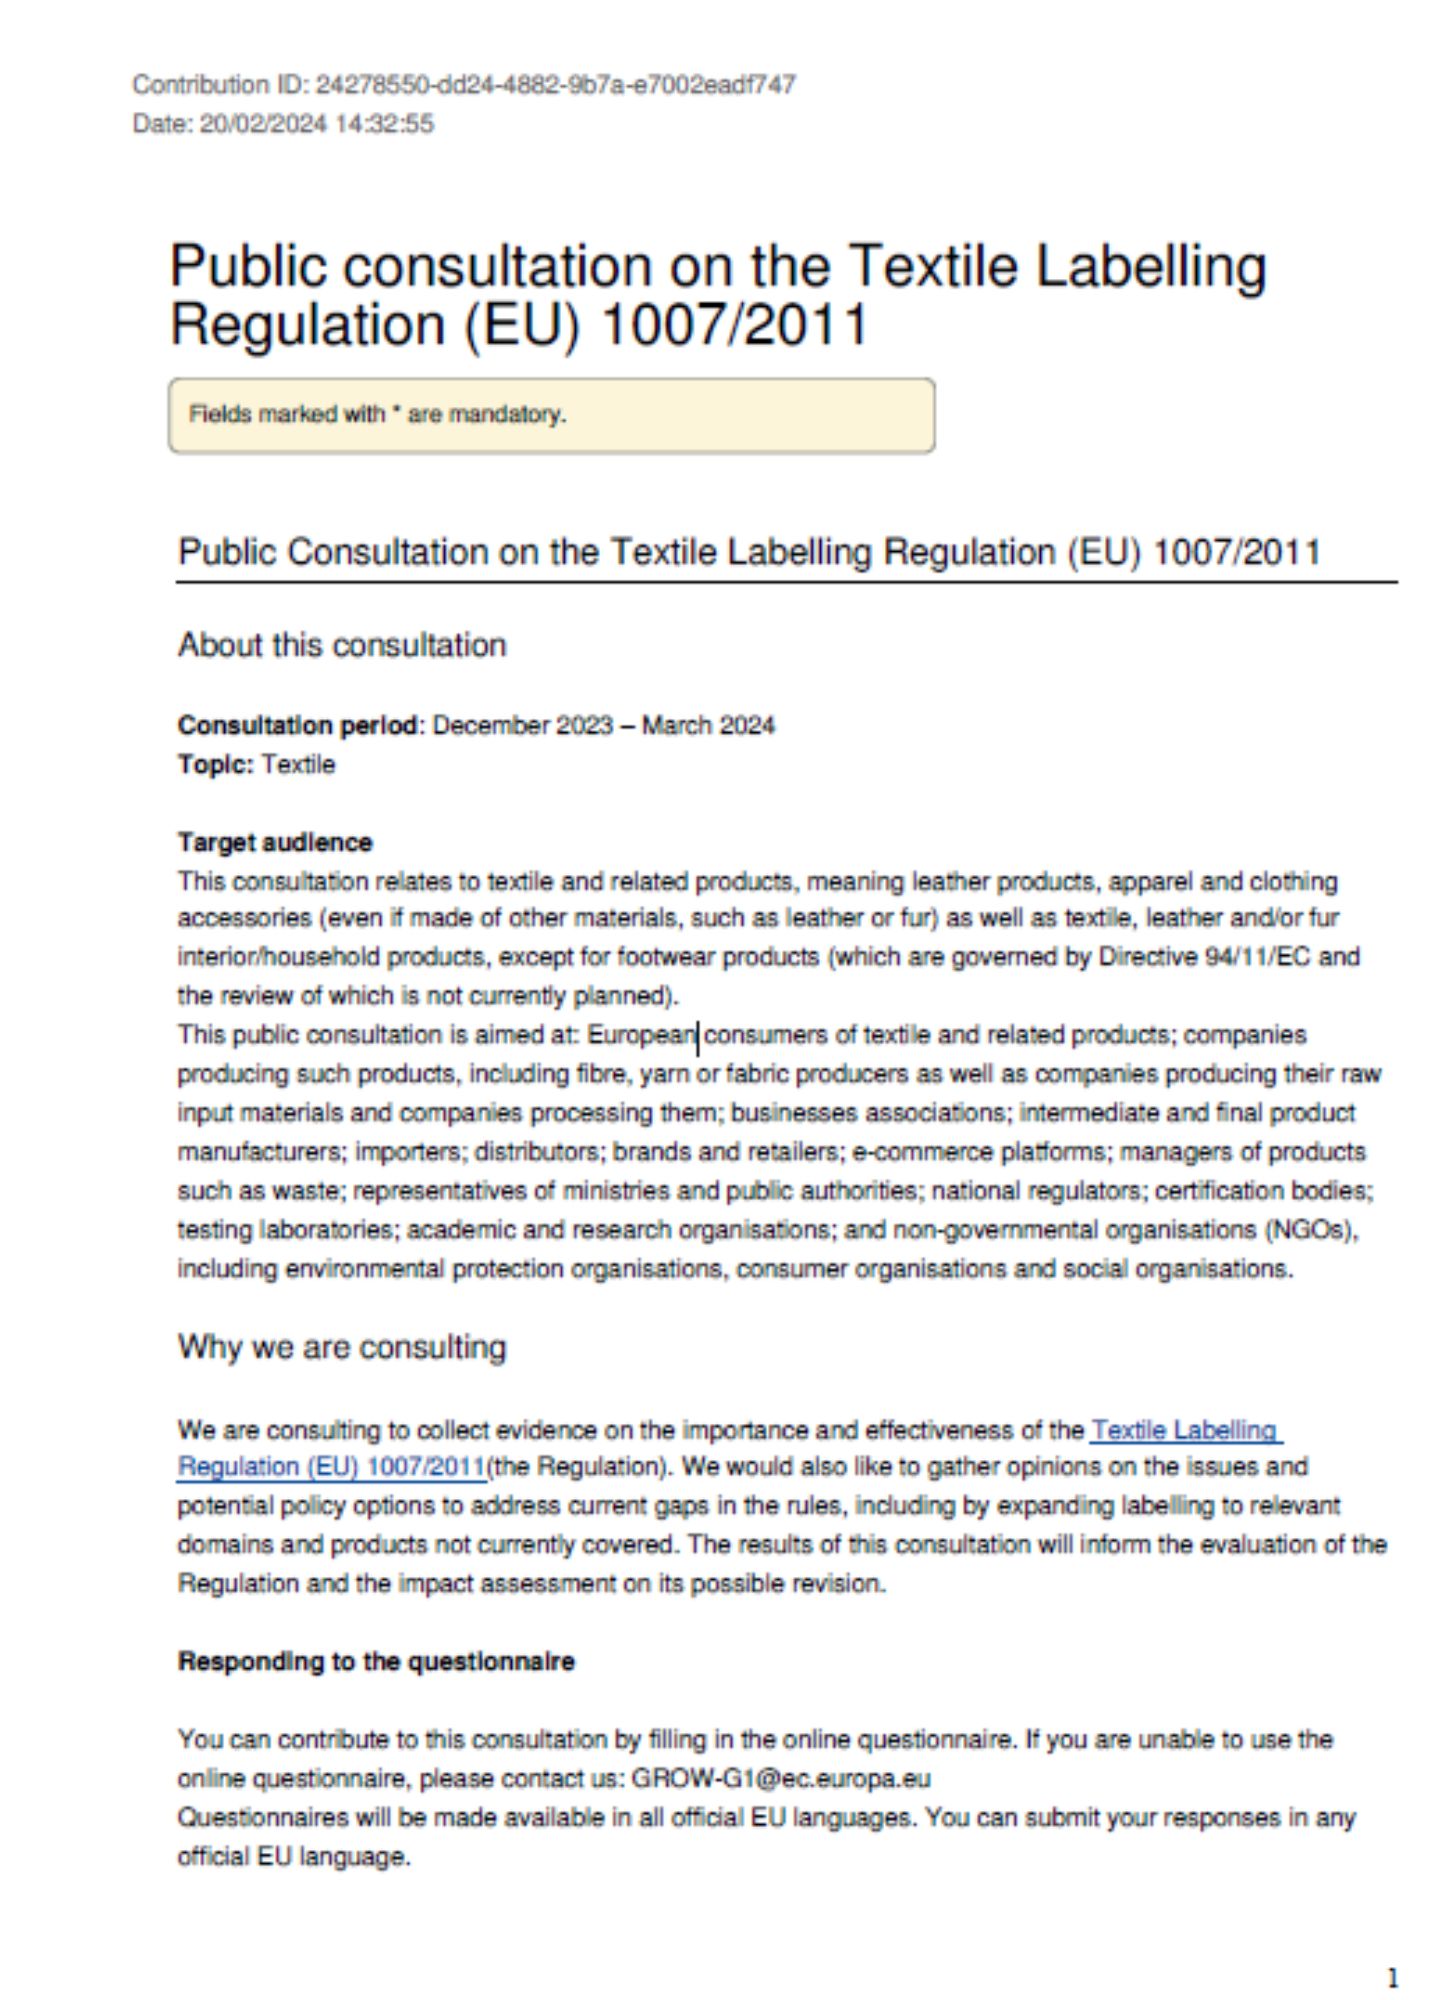 Public consultation on the Textile Labelling Regulation